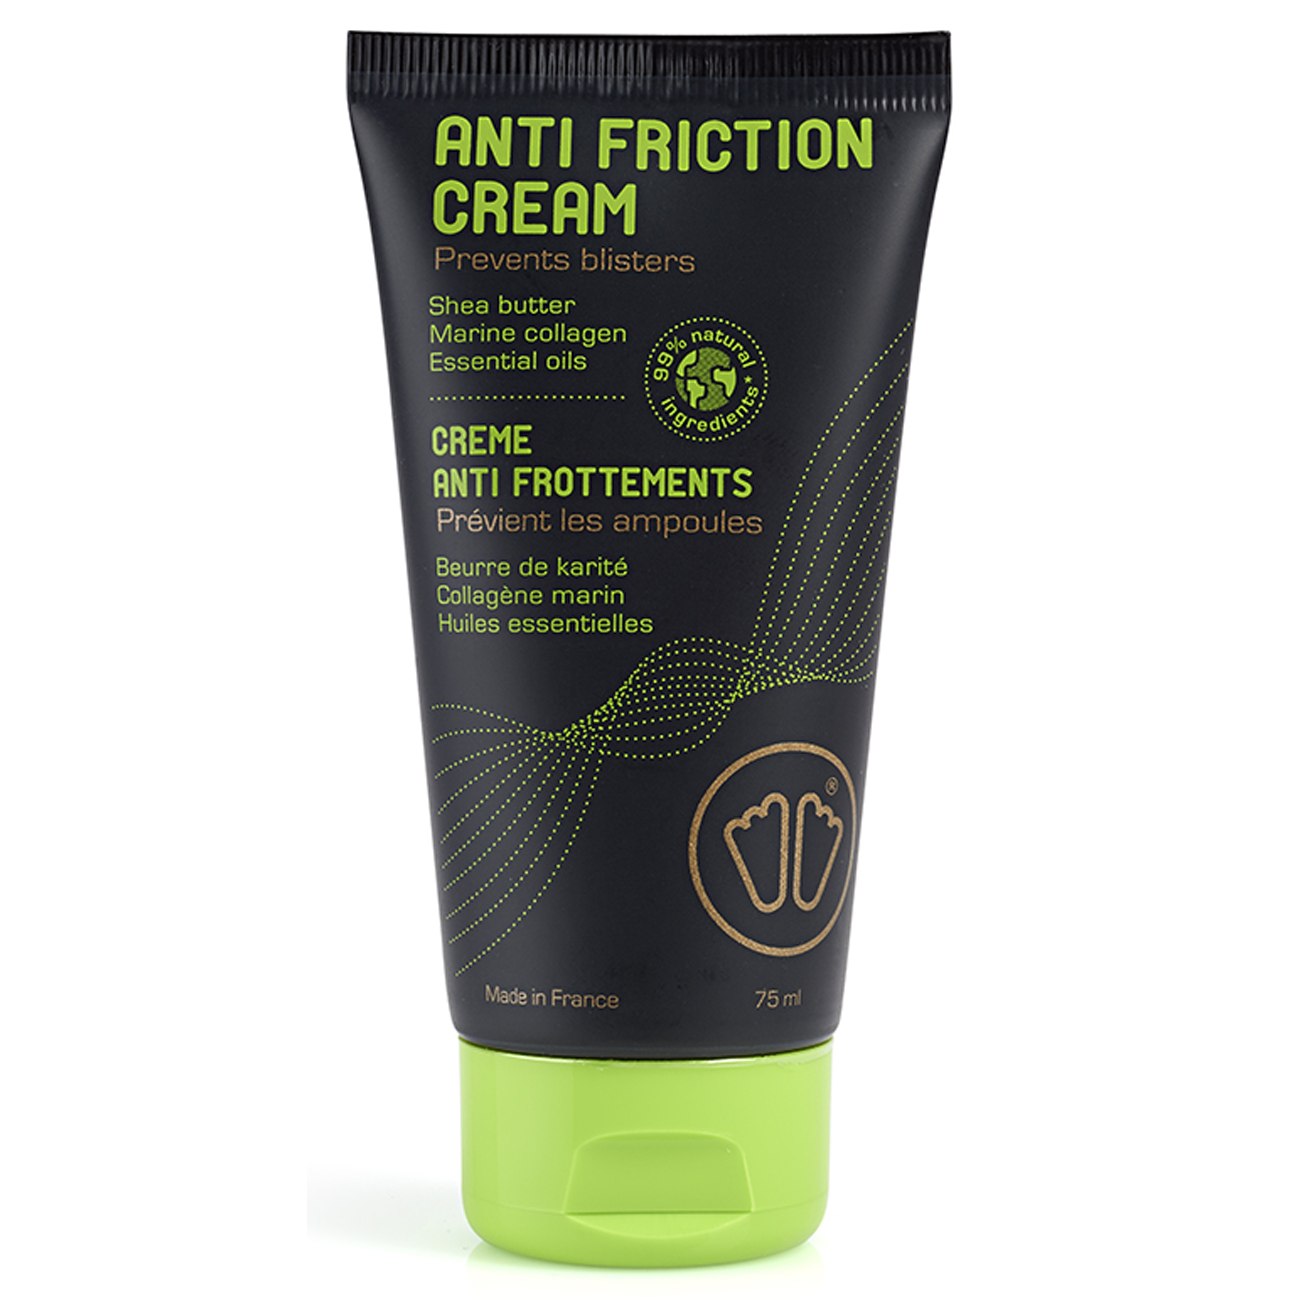 Productfoto van Sidas Anti Friction Cream (15ml)